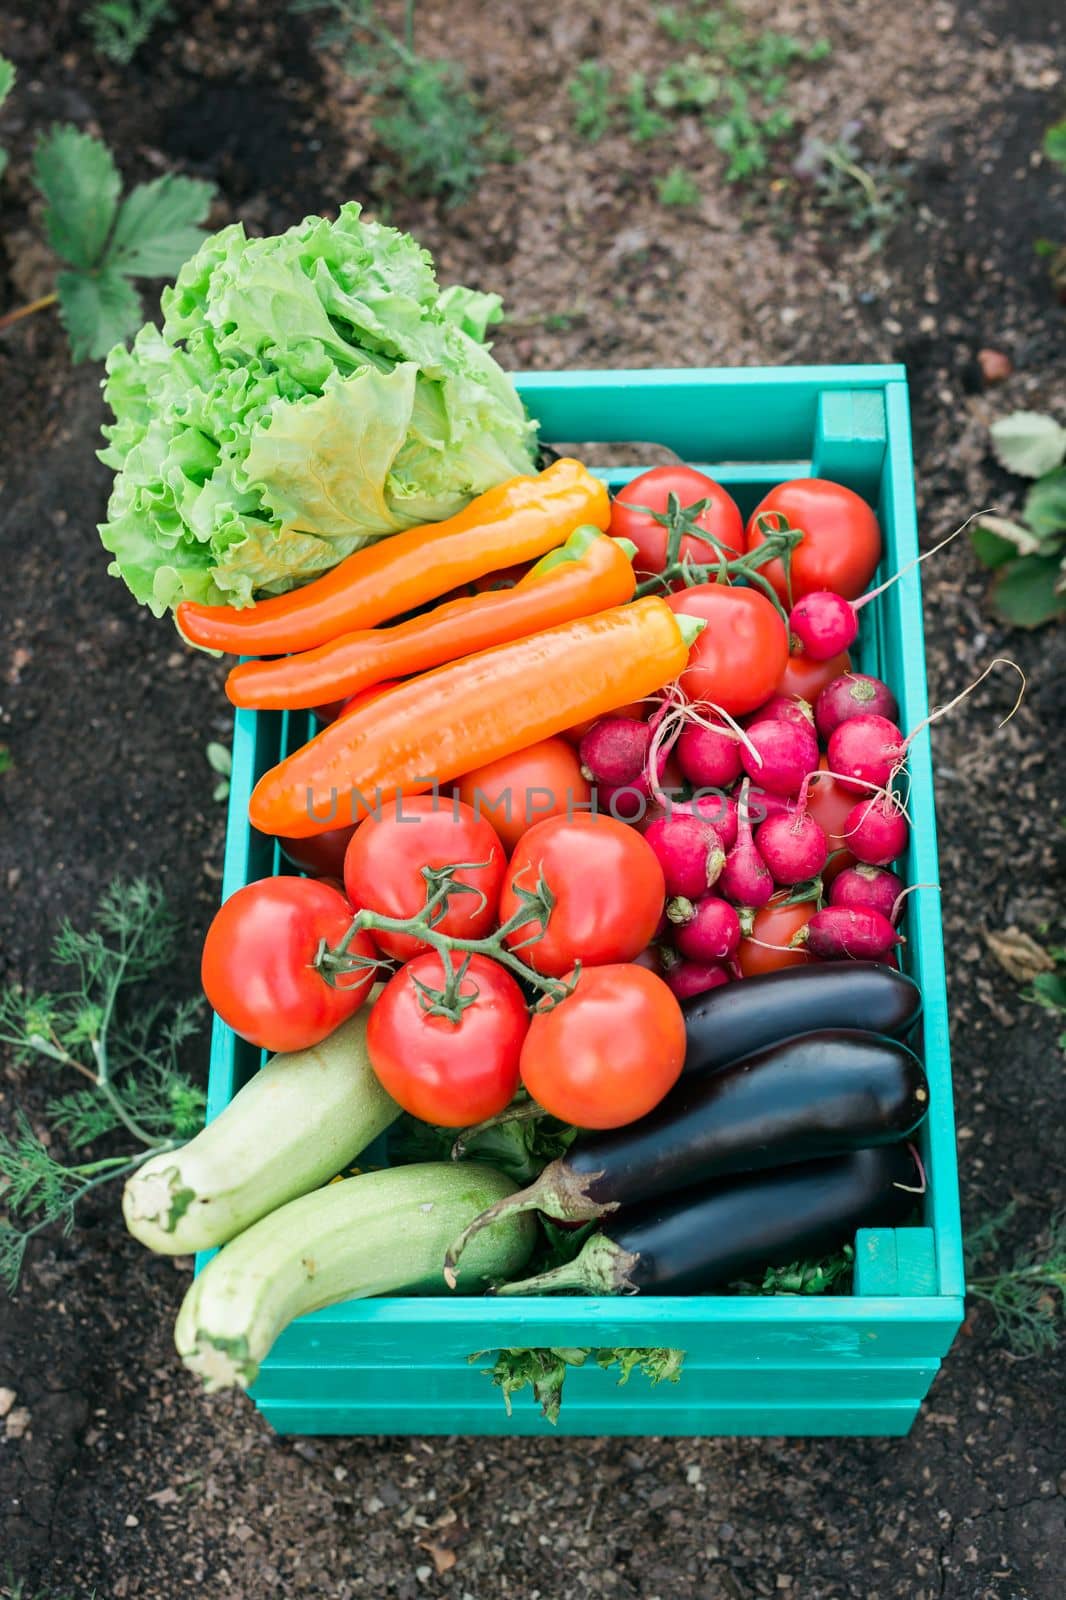 Wooden box filled fresh vegetables in garden harvesting and gardening